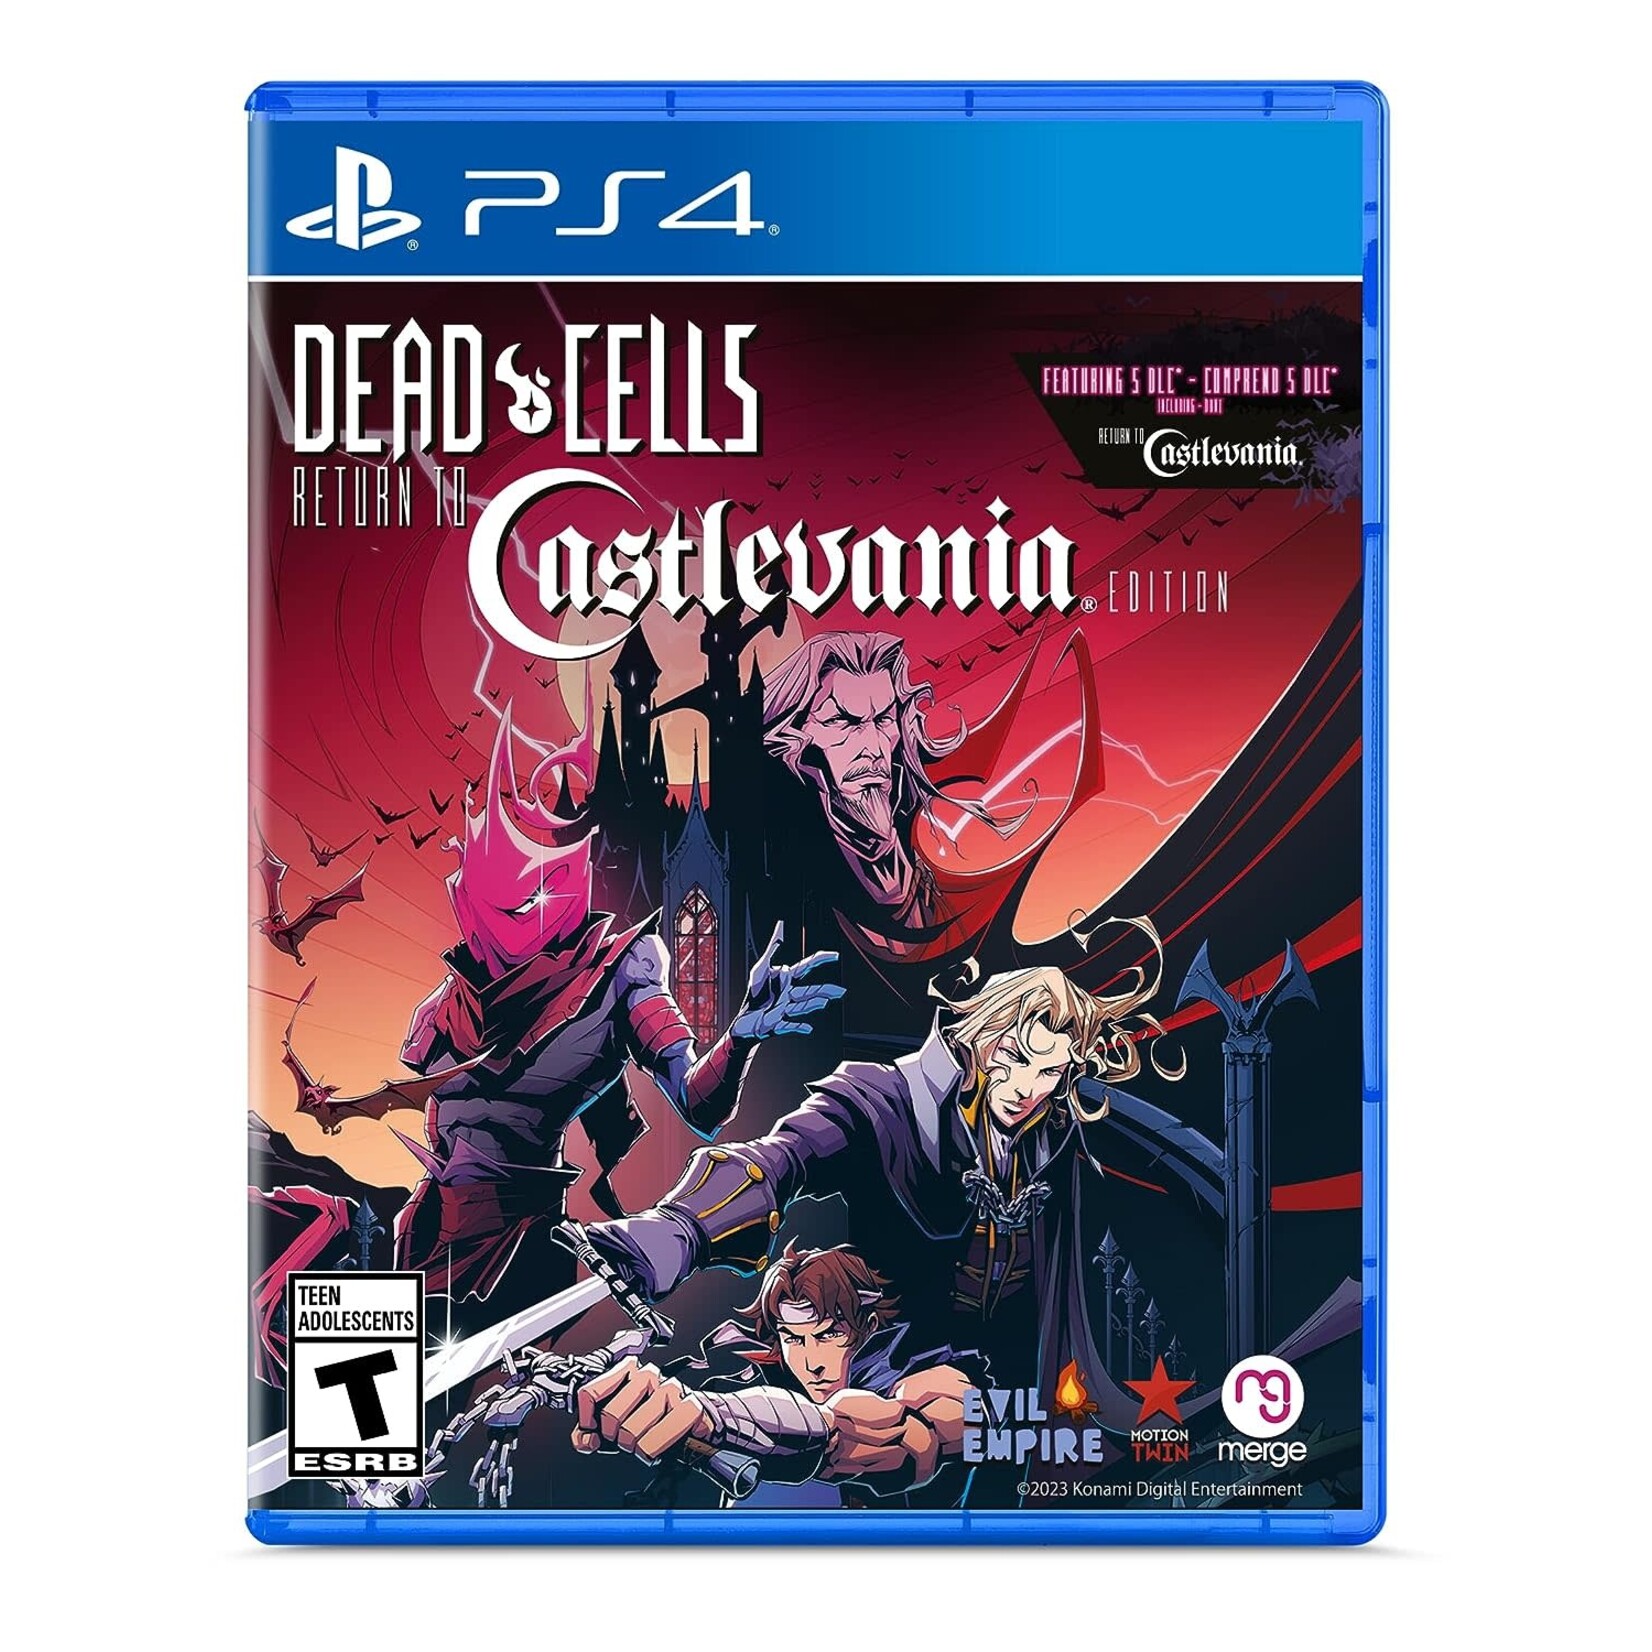 PS4-Dead Cells Return to Castlevania